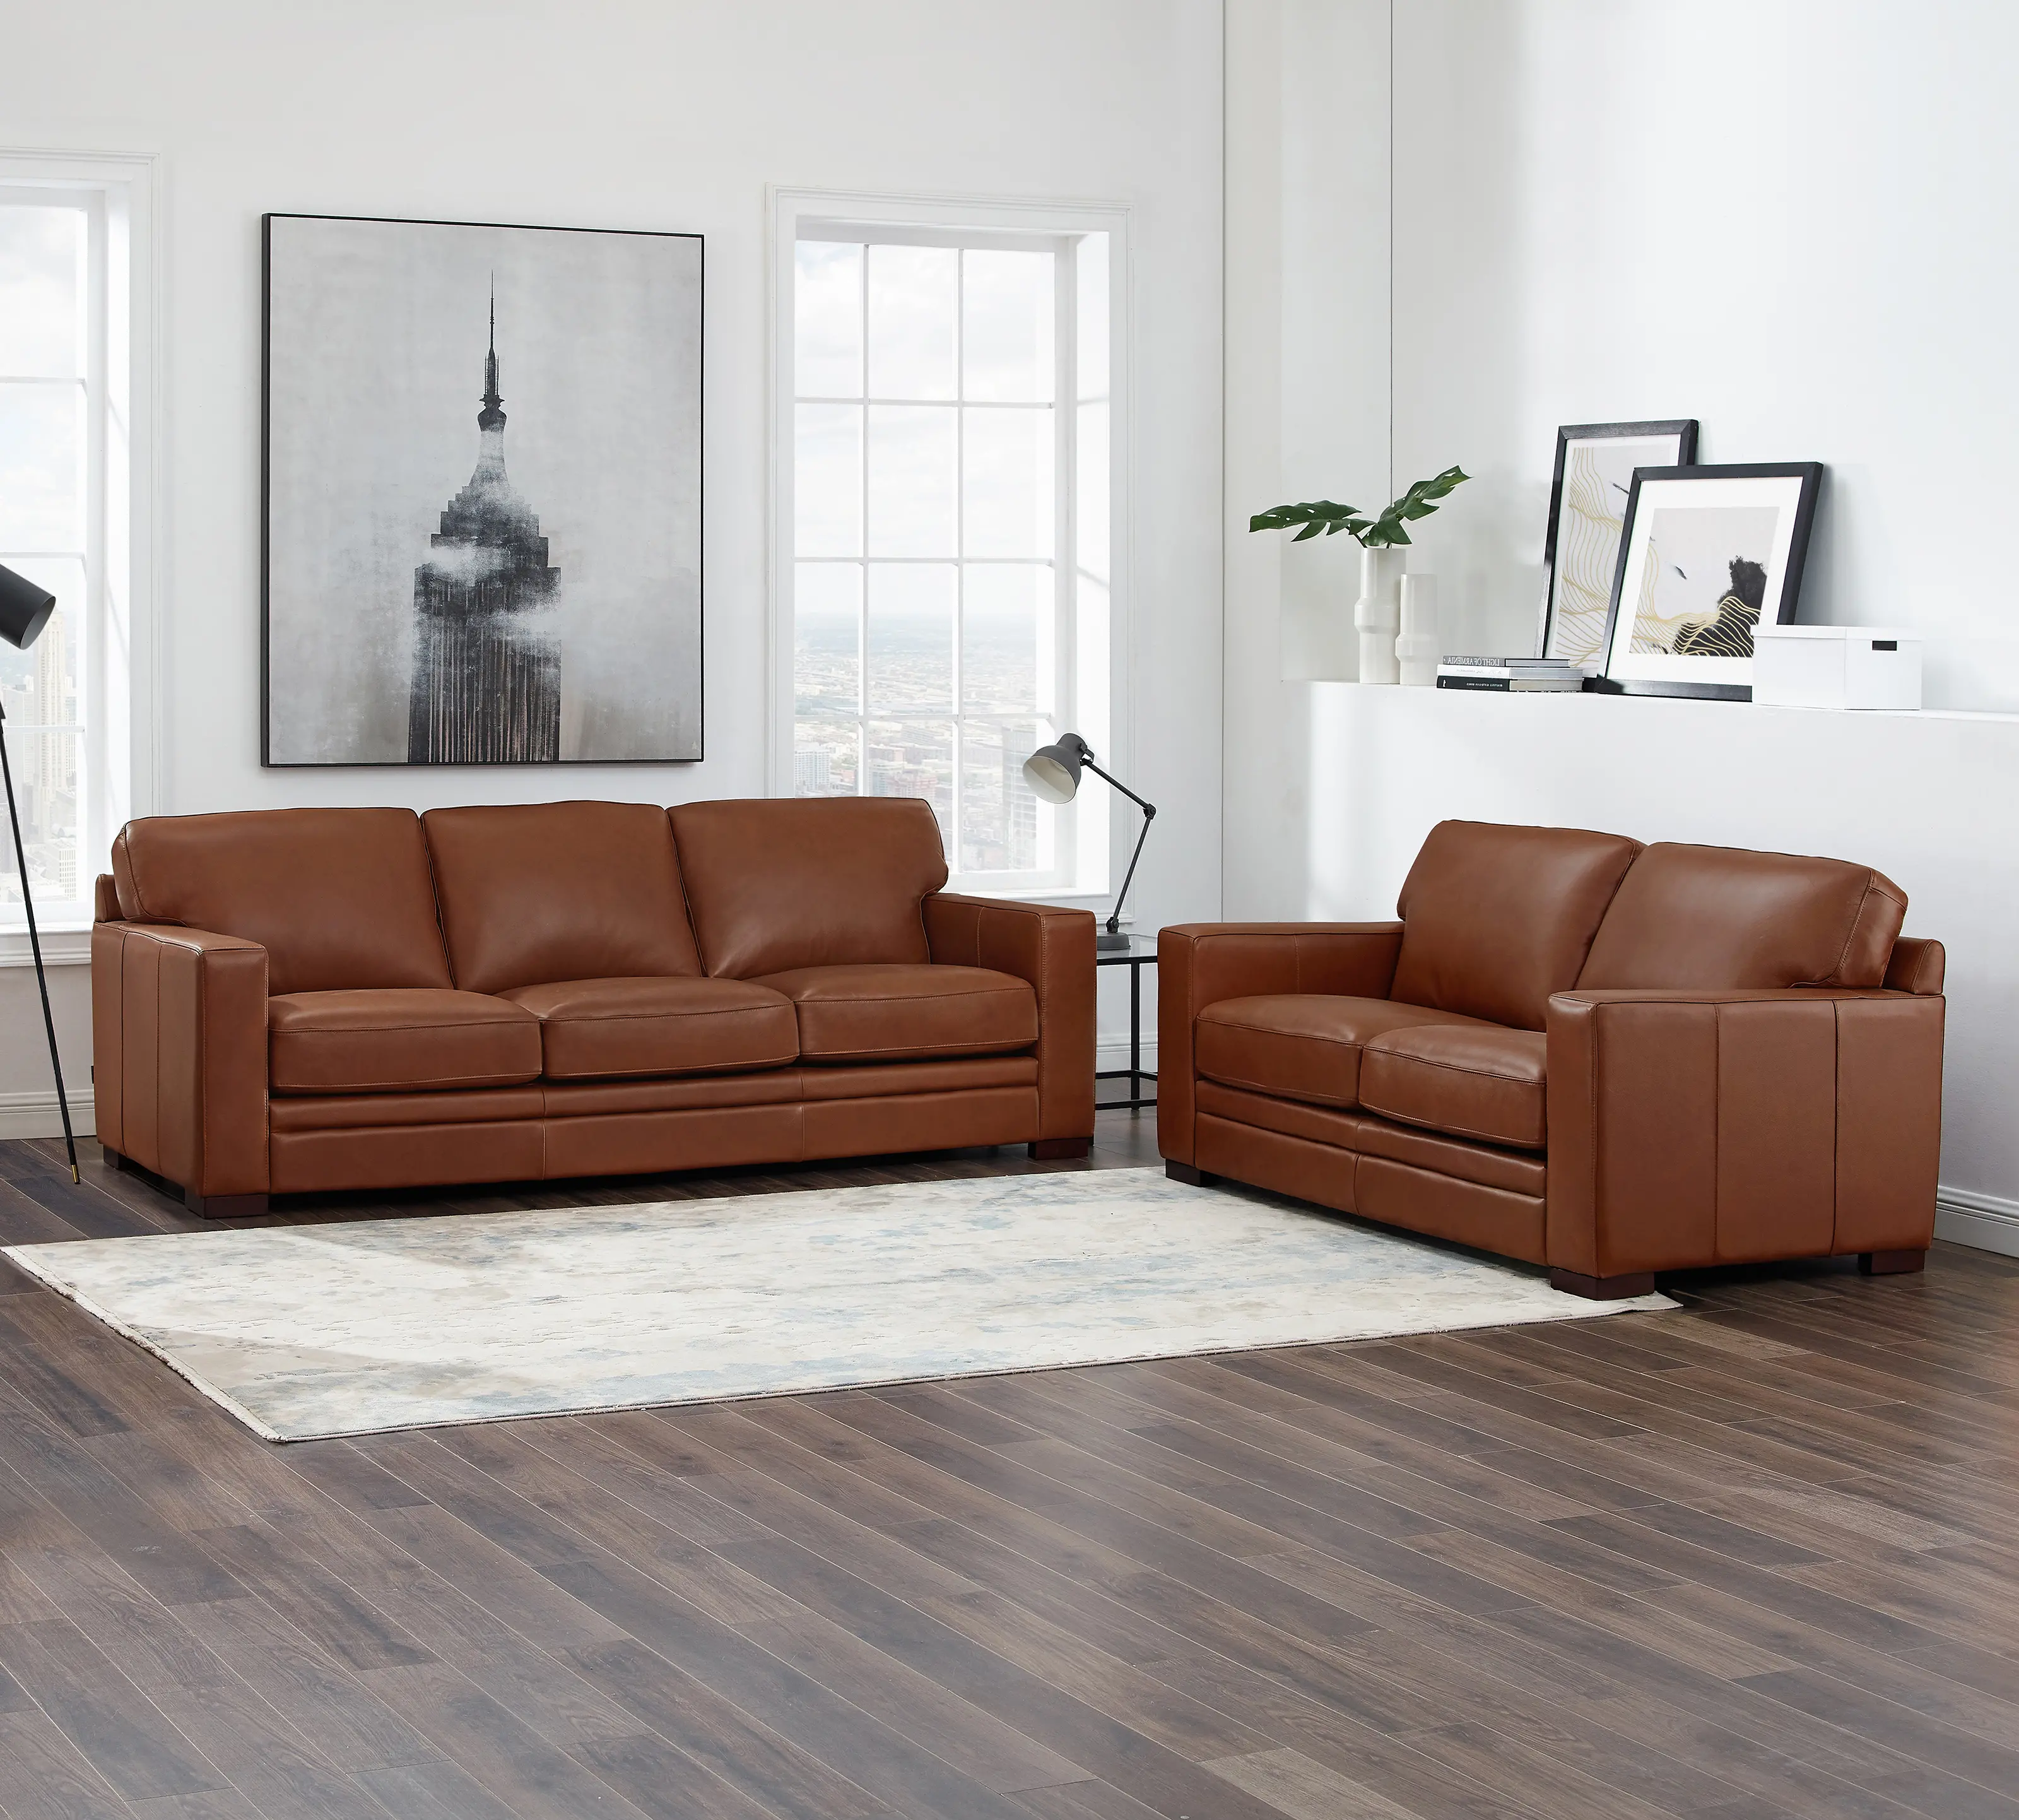 Chatsworth Brown Leather 2 Piece Living Room Set - Sofa & Loveseat...